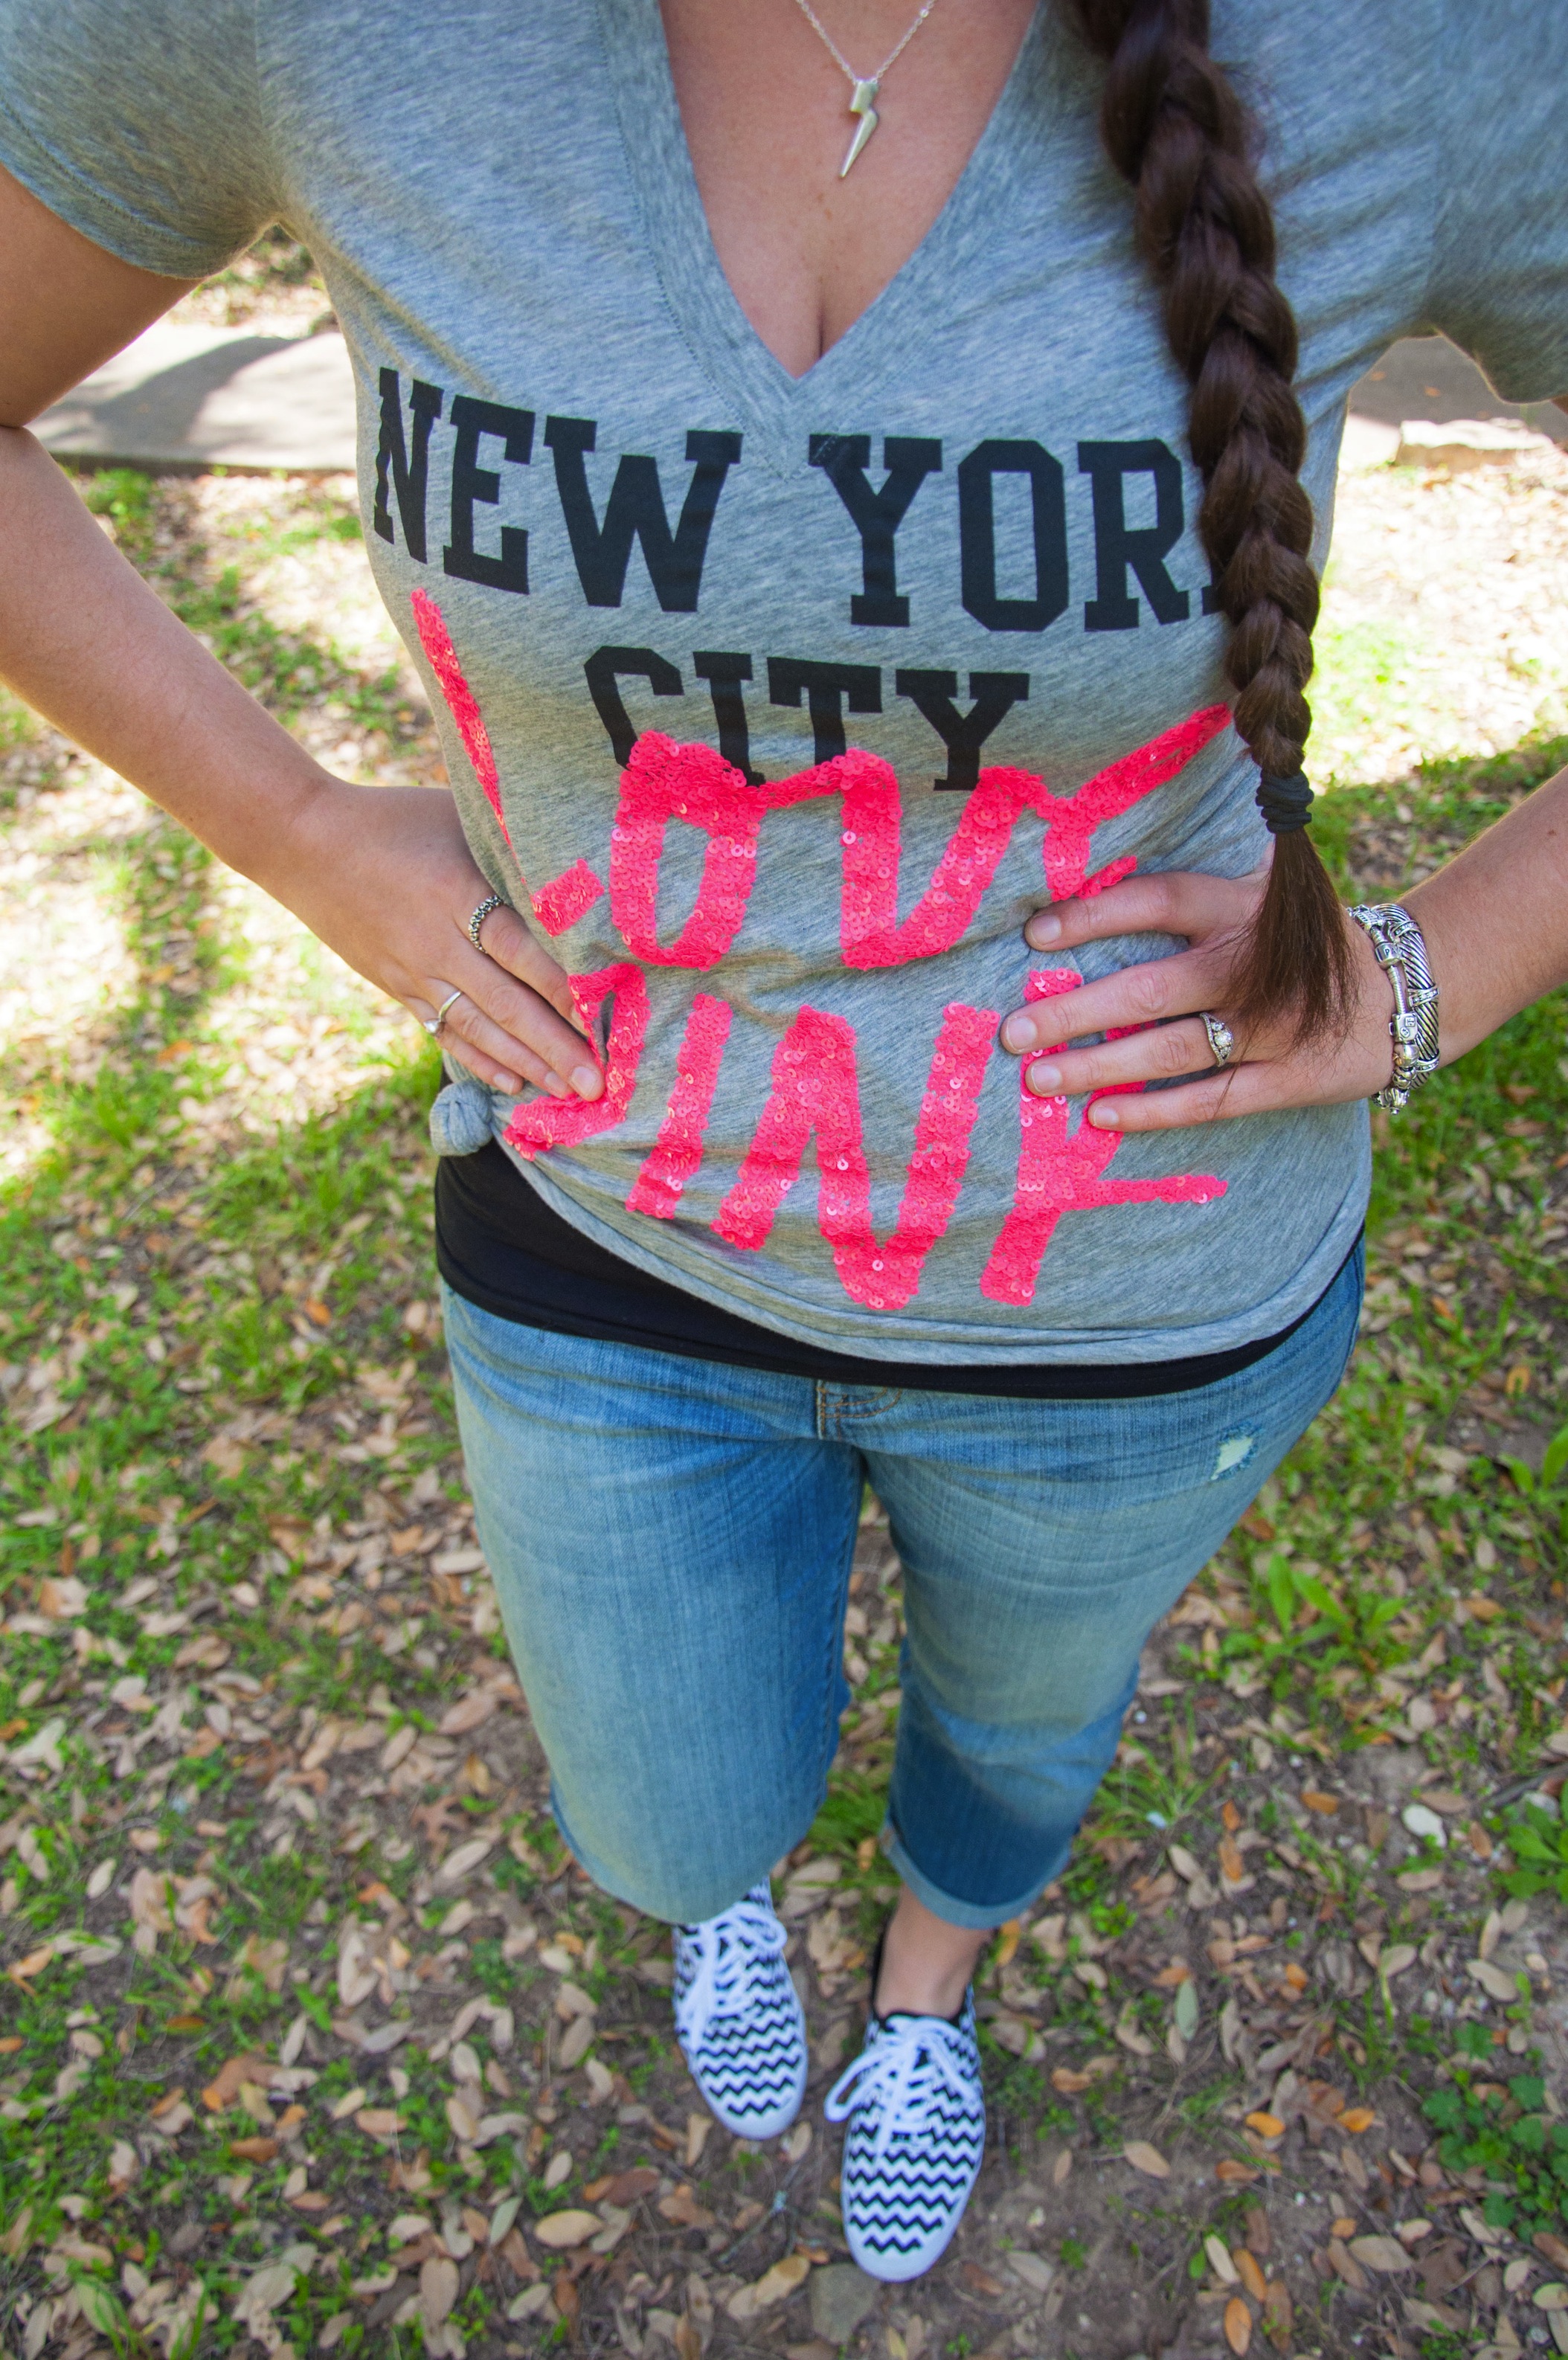 New York City shirt with chevron keds